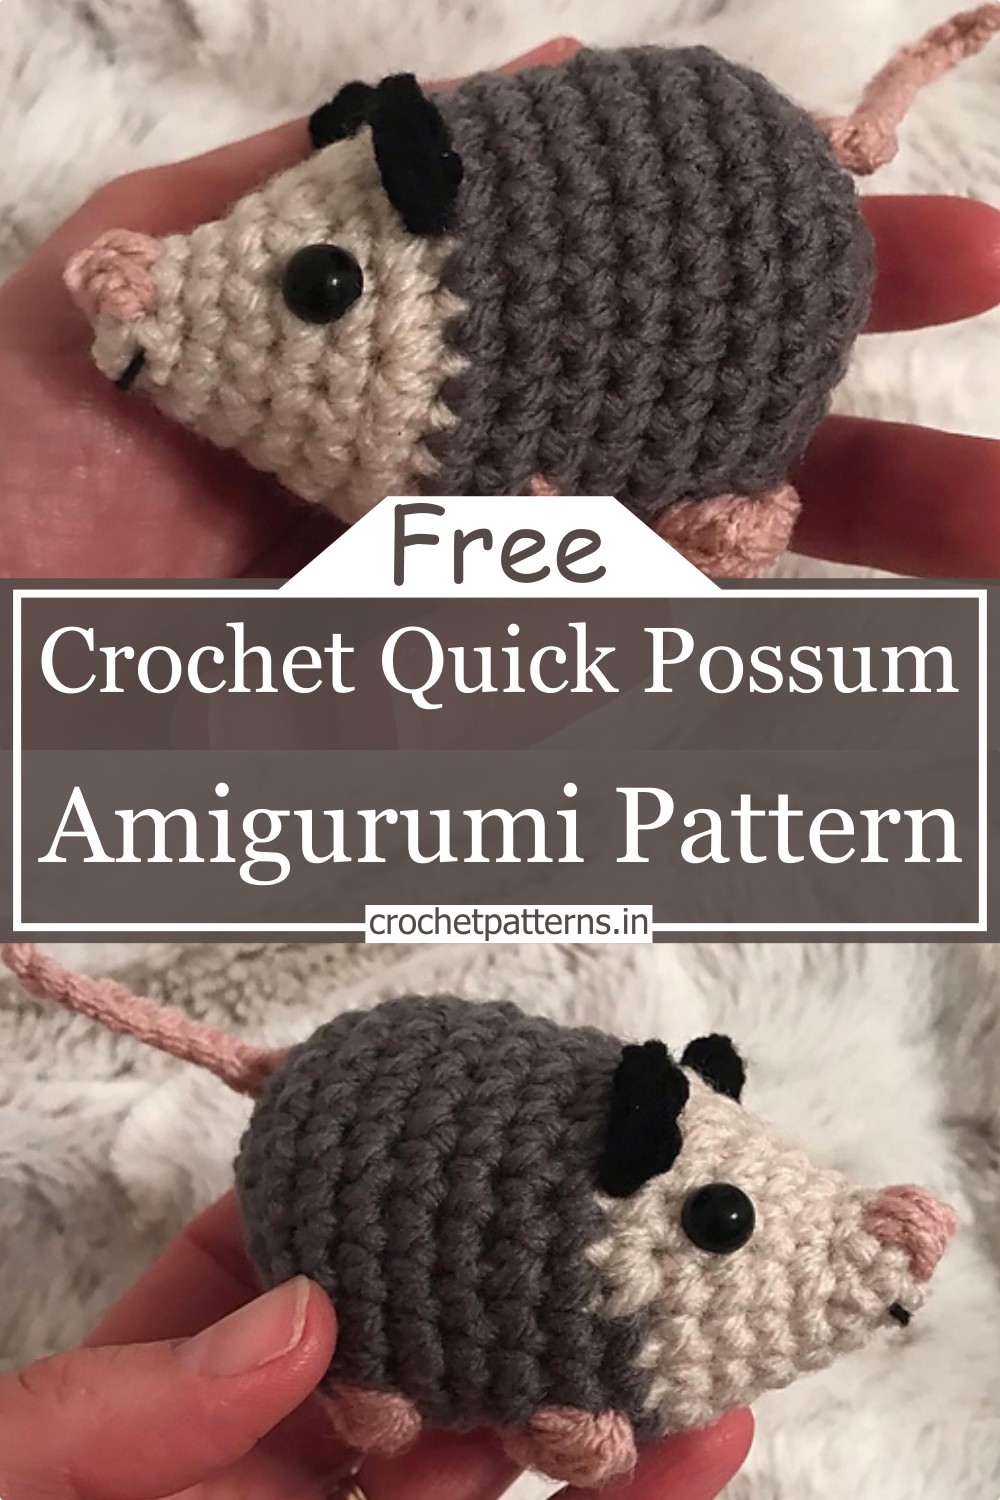 Crochet Quick Possum Amigurumi Pattern